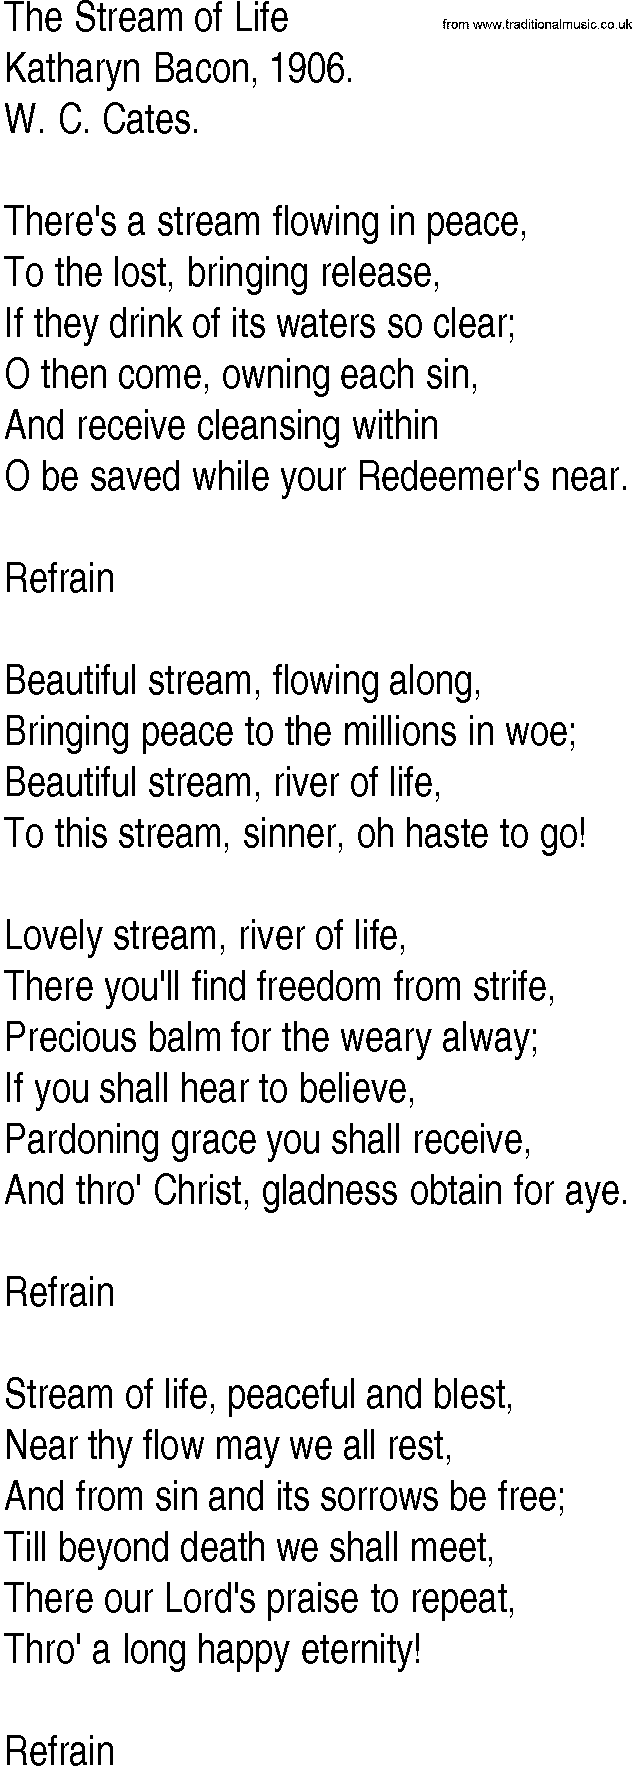 Hymn and Gospel Song: The Stream of Life by Katharyn Bacon lyrics